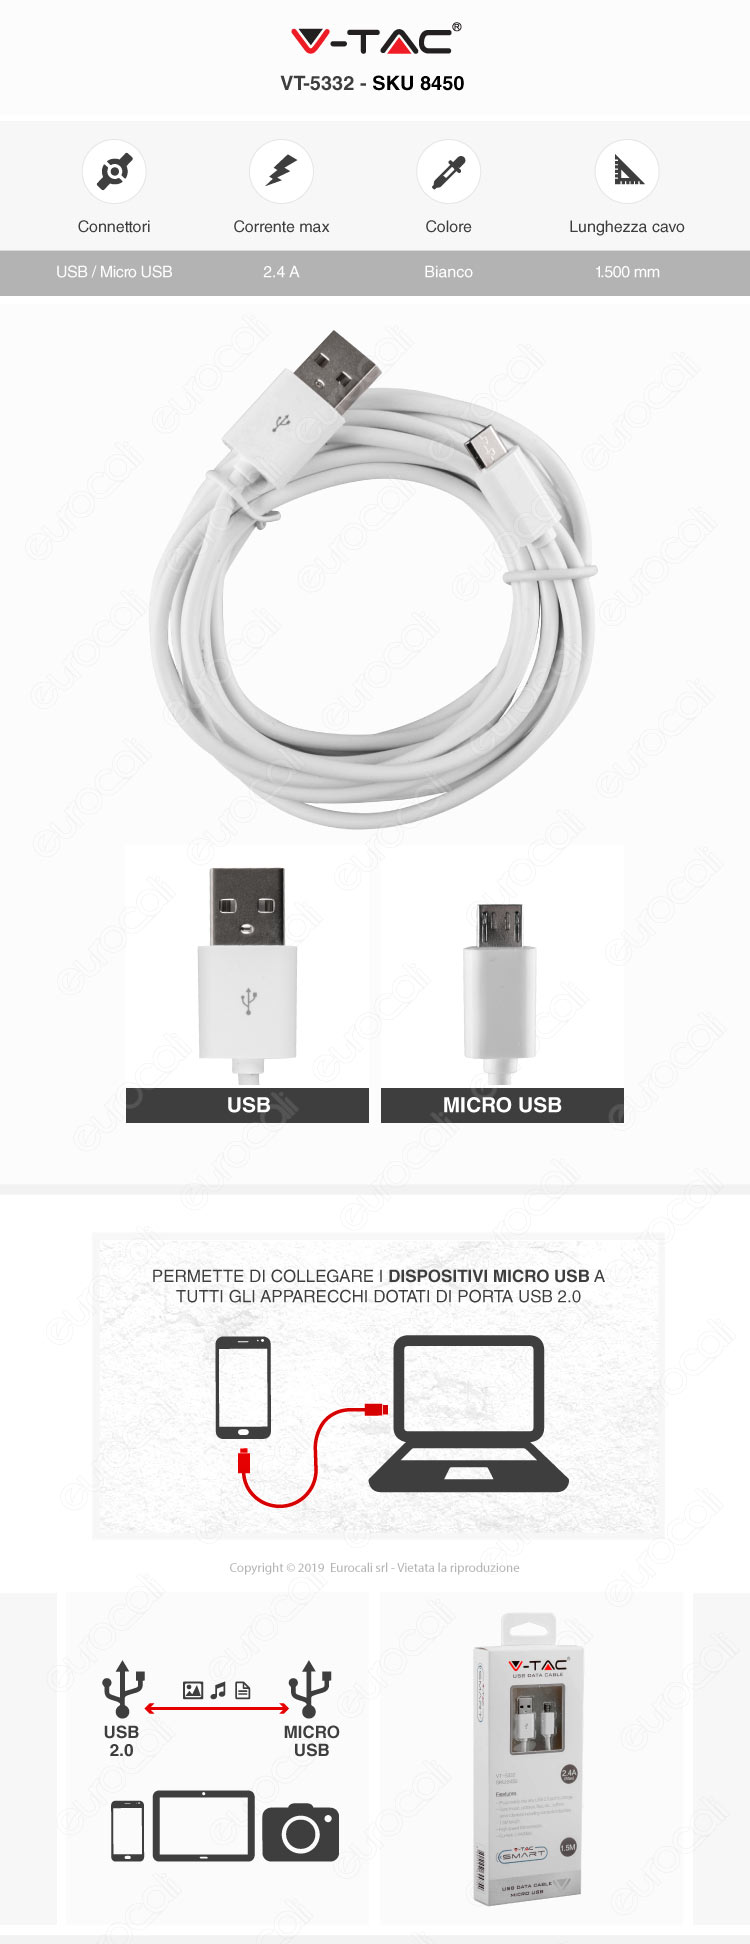 V-Tac VT-5332 USB Data Cable Micro USB Cavo Colore Bianco 1,5m